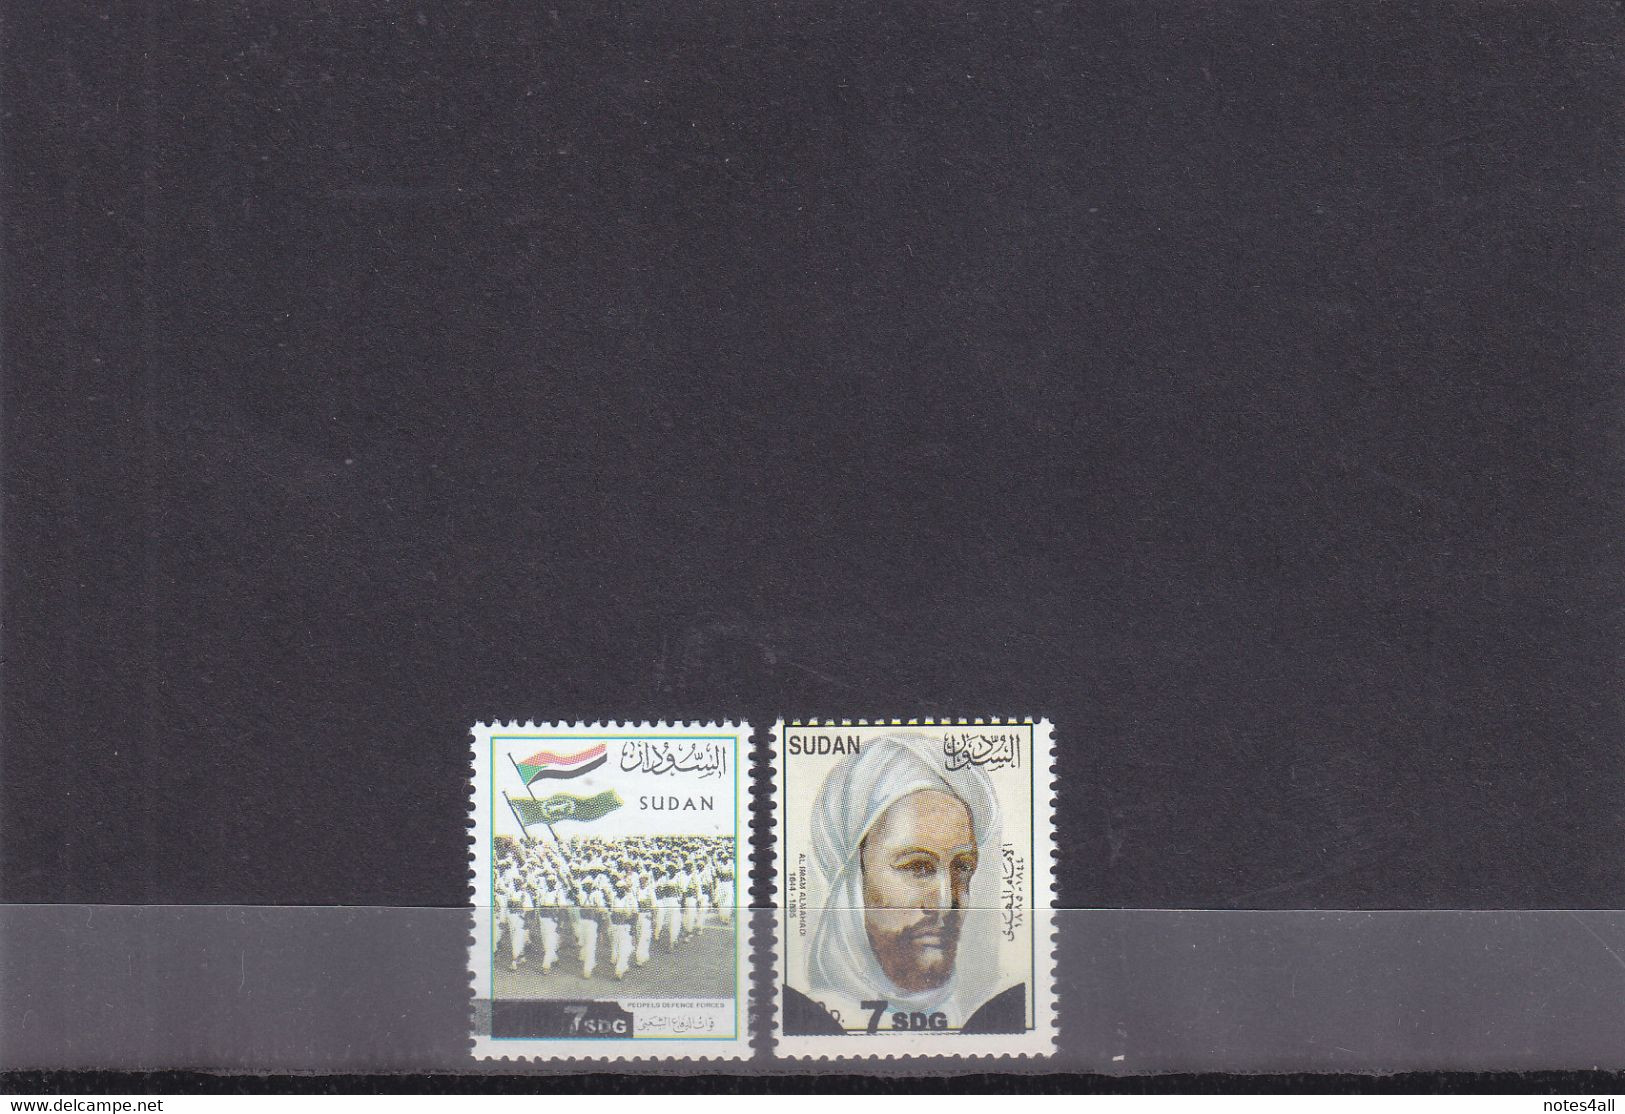 Stamps SUDAN 2012 SC-638 639 DEFINITIVE SERIE SET SURCHARGED MNH #15 - Sudan (1954-...)